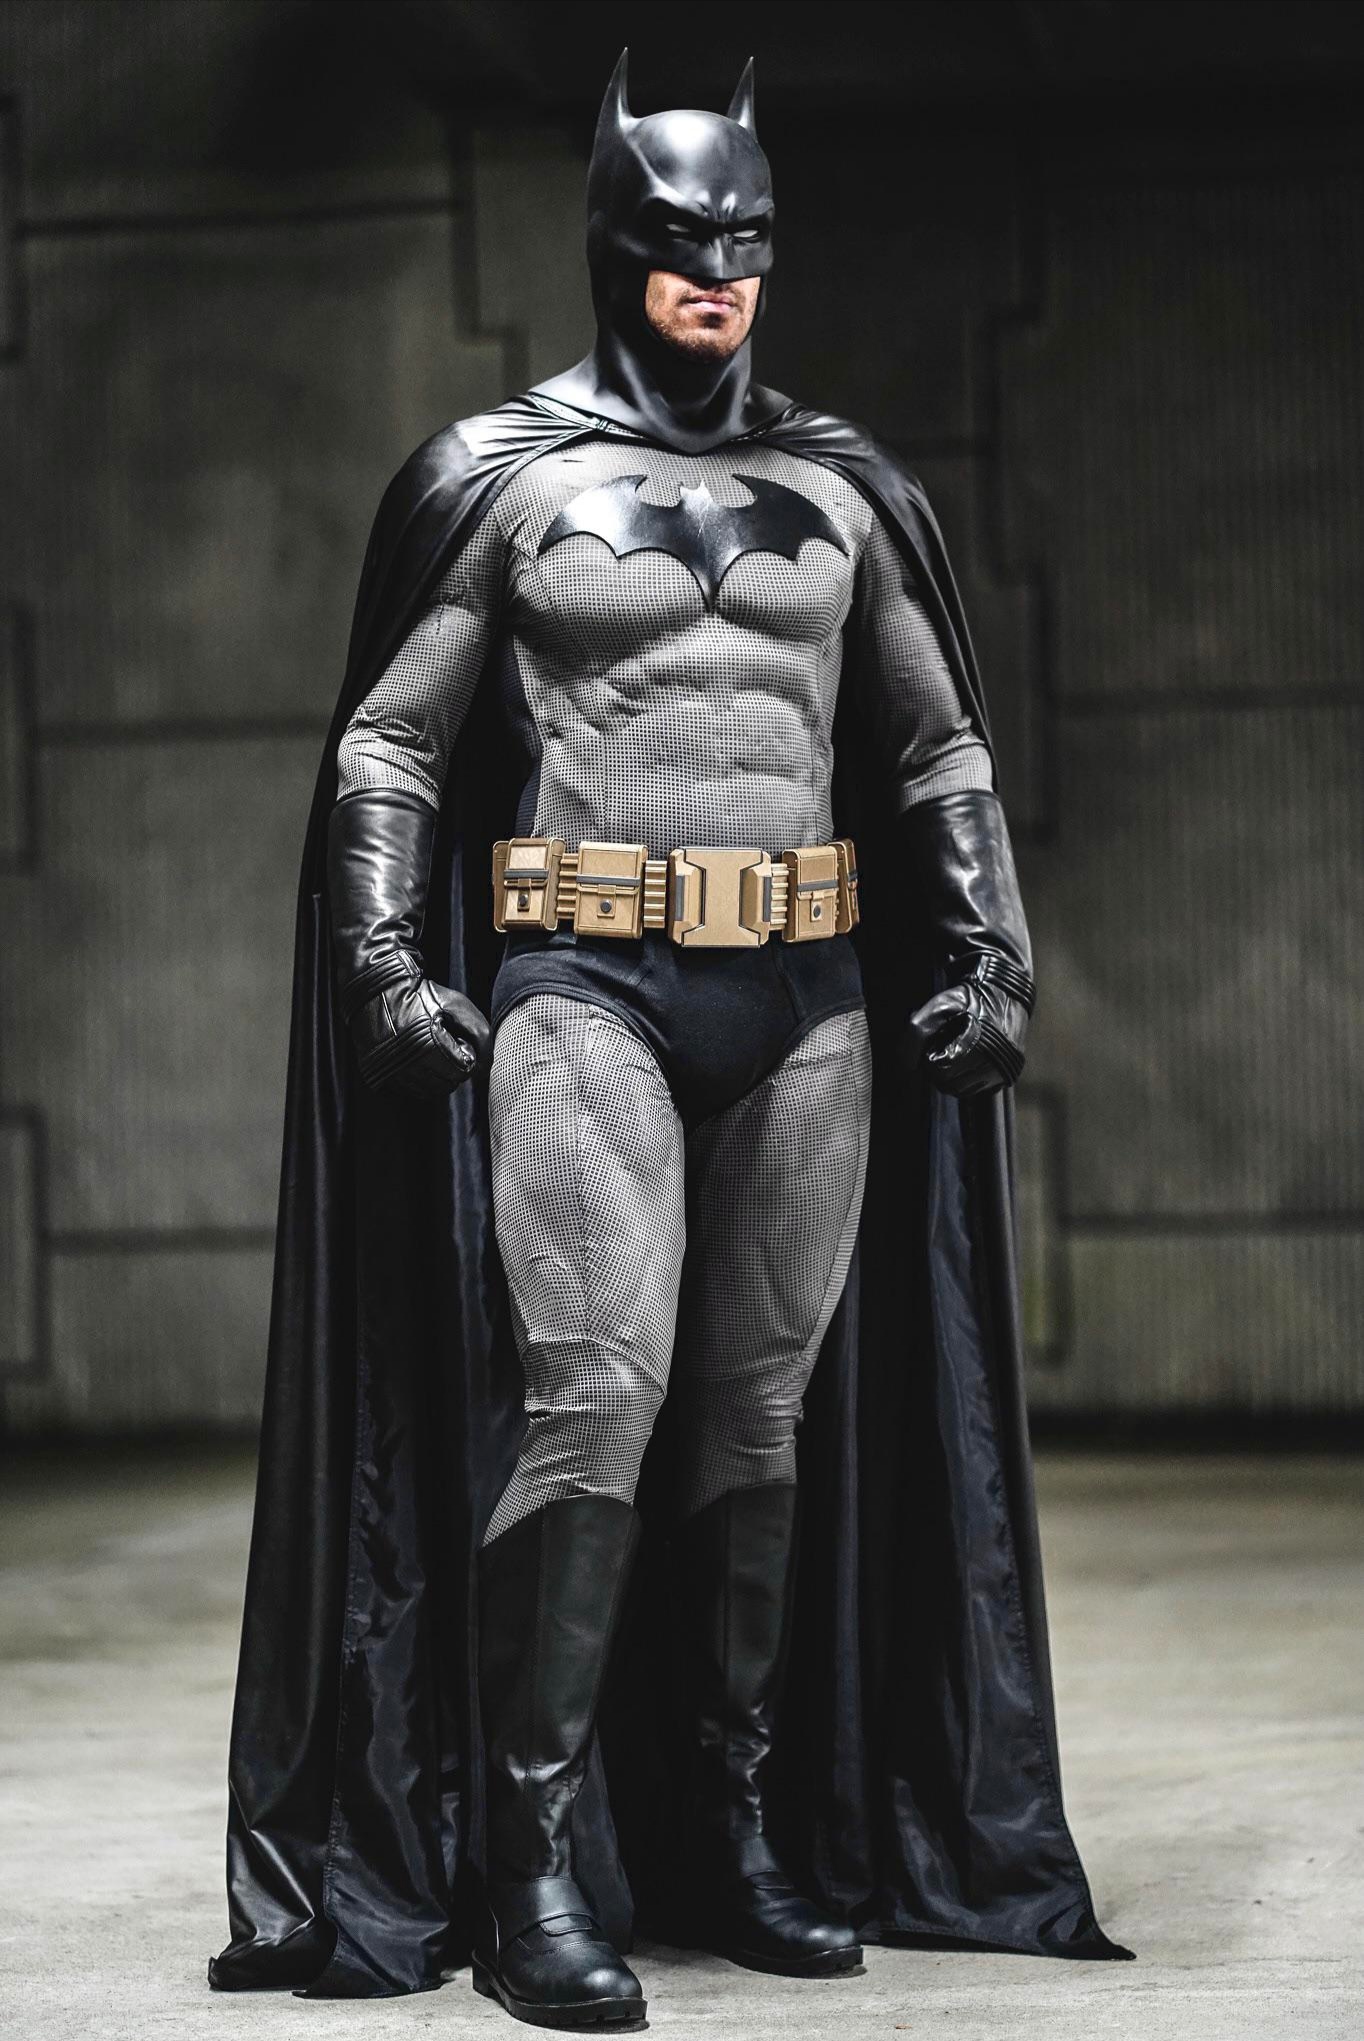 bombilla atención Destello تويتر \ YoleocomicsDC and Games🎮 على تويتر: "Un traje idéntico a los  cómics de Batman no exist... PD: Cosplay de amarjafrani  https://t.co/ZzEH3ly5l6"